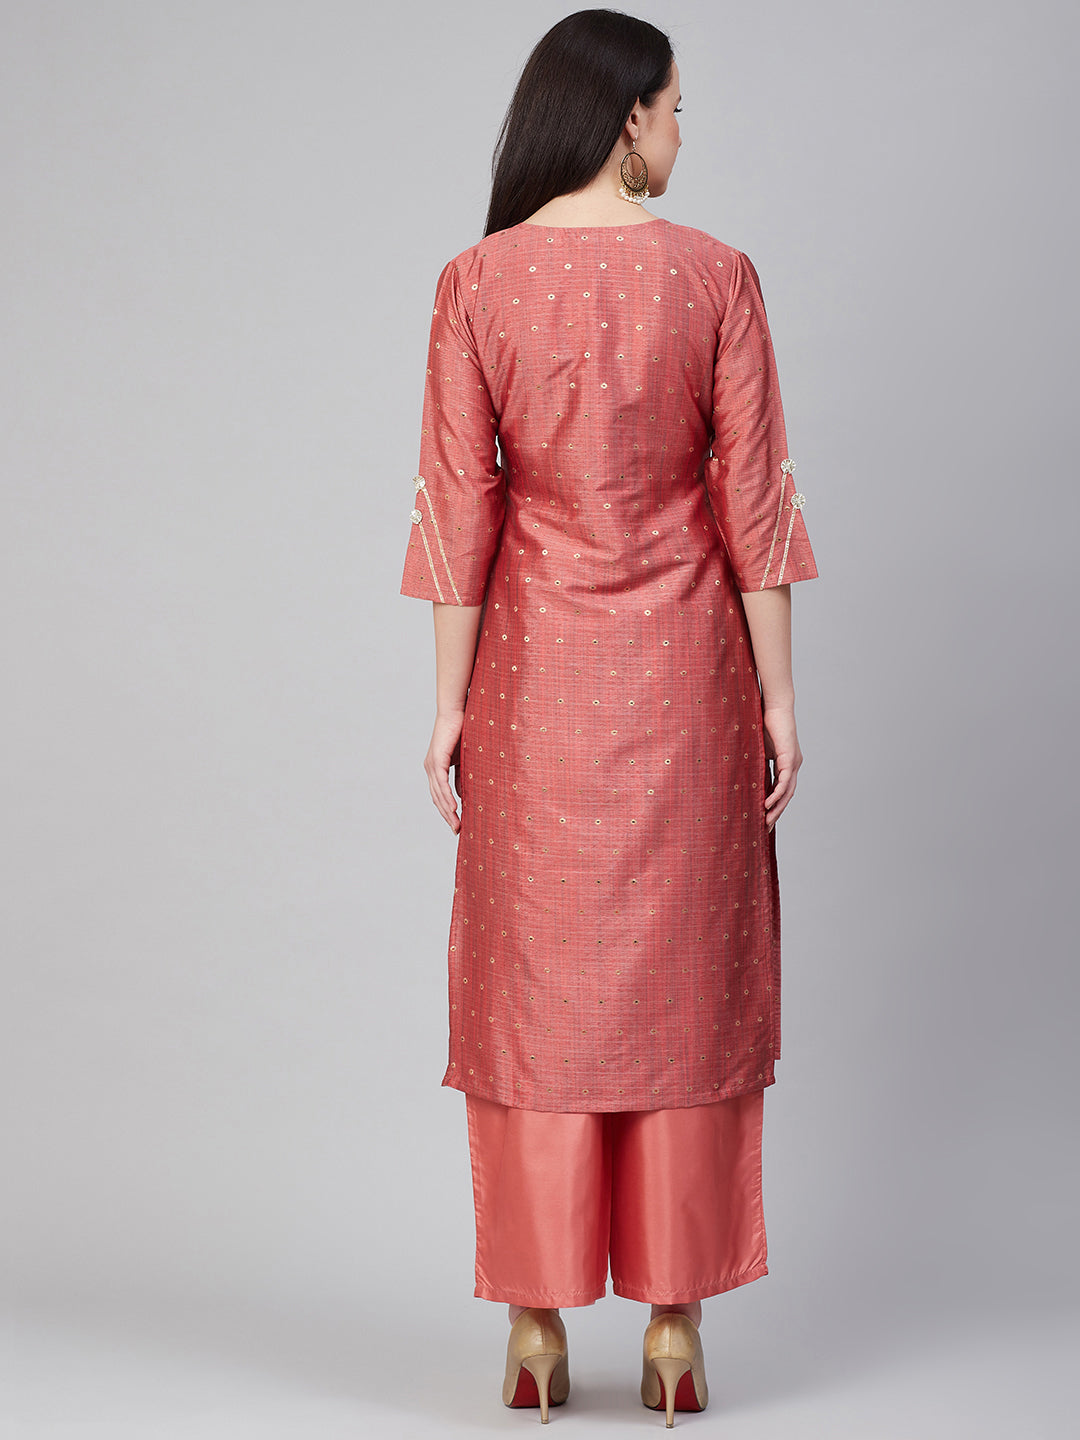 Women's Peach Gotta Patti Lace Details Kurta With Palazzos - Bhama Couture